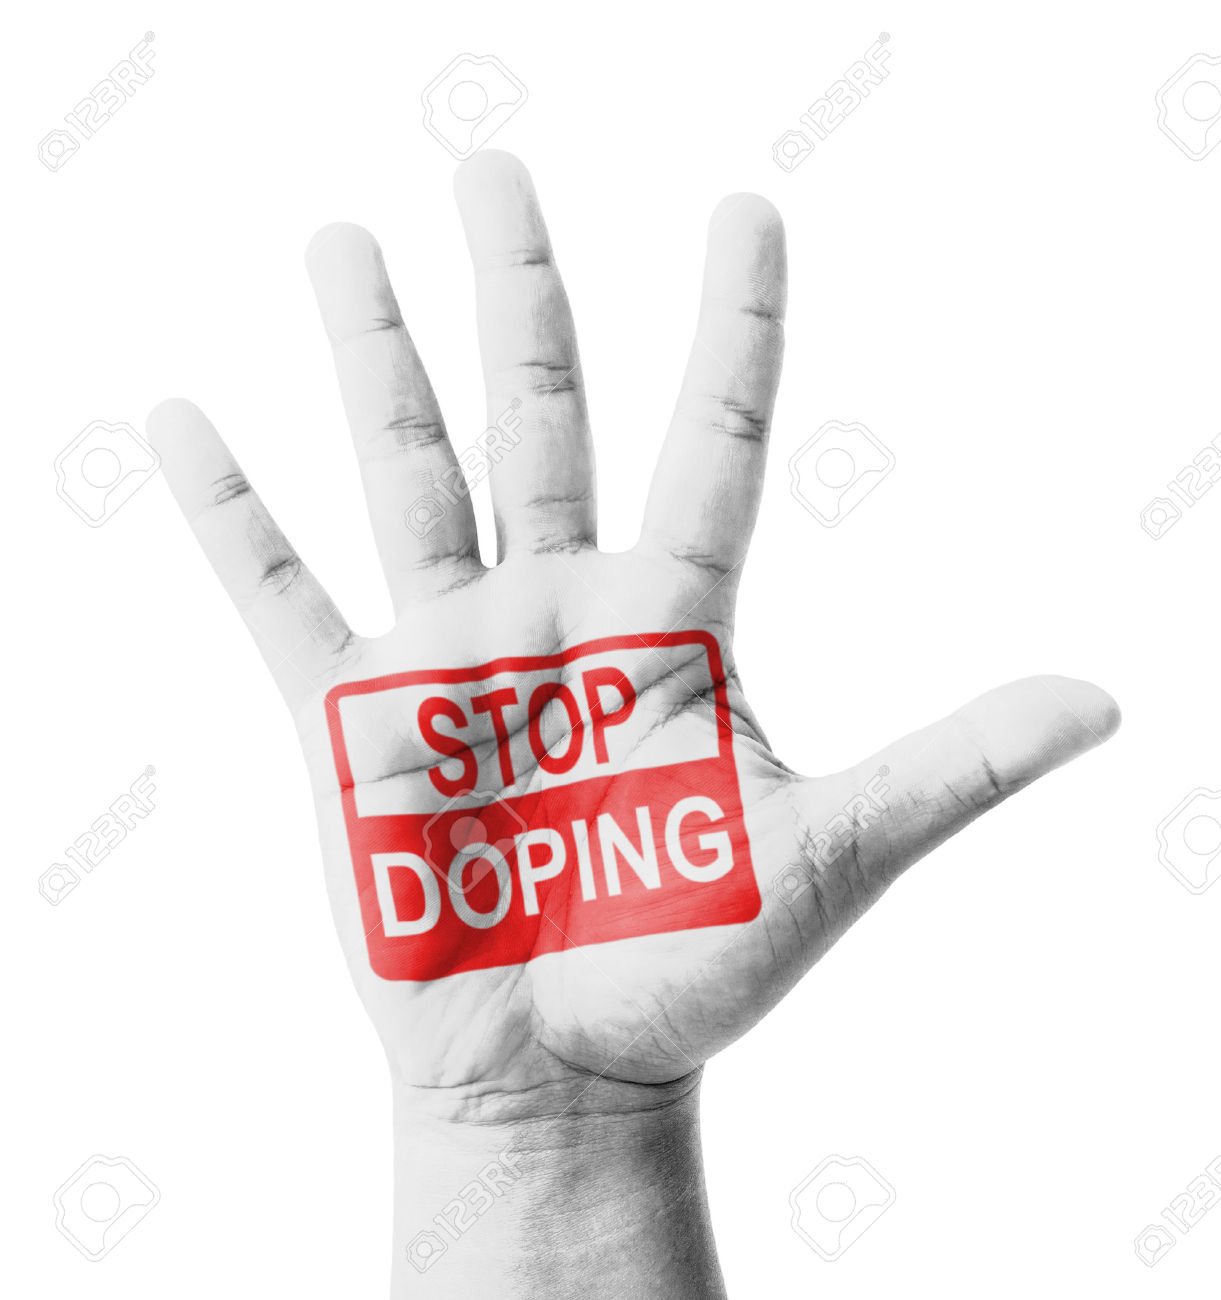 doping-2